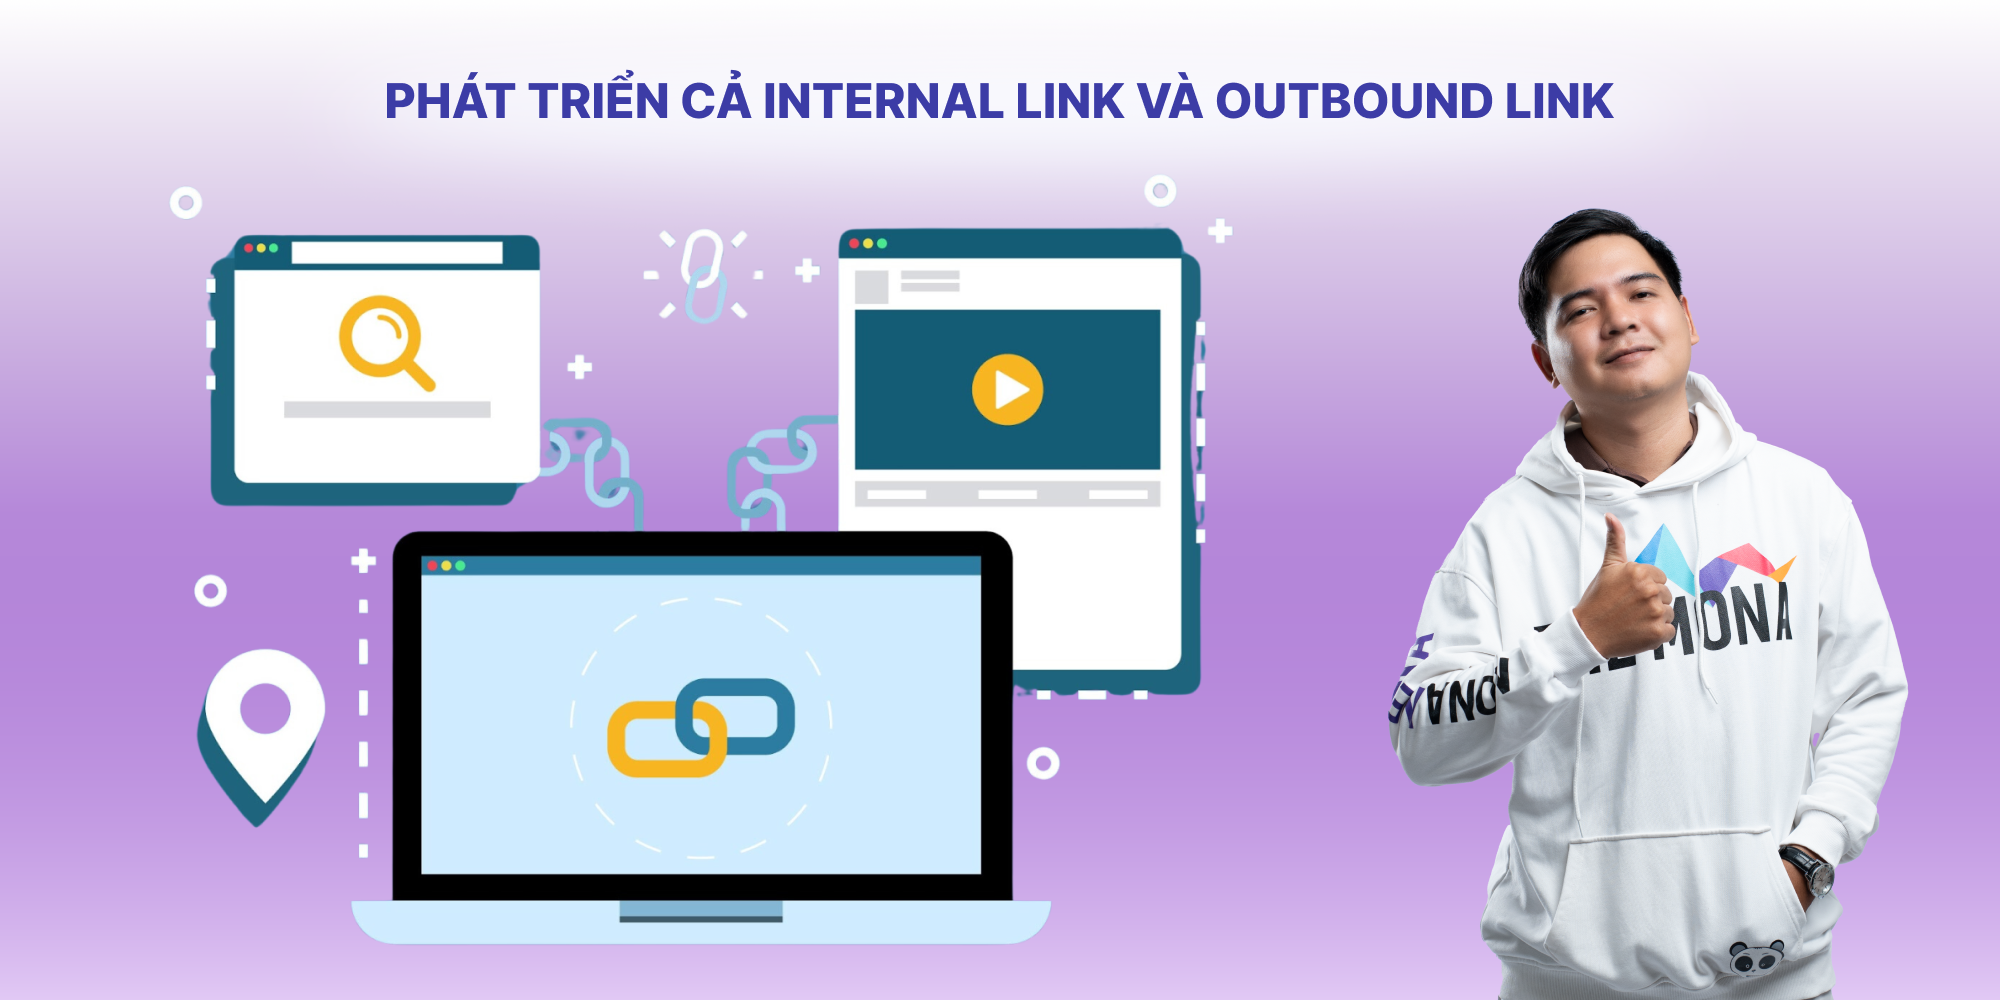 Kết hợp cả Internal Link và Outbound Link